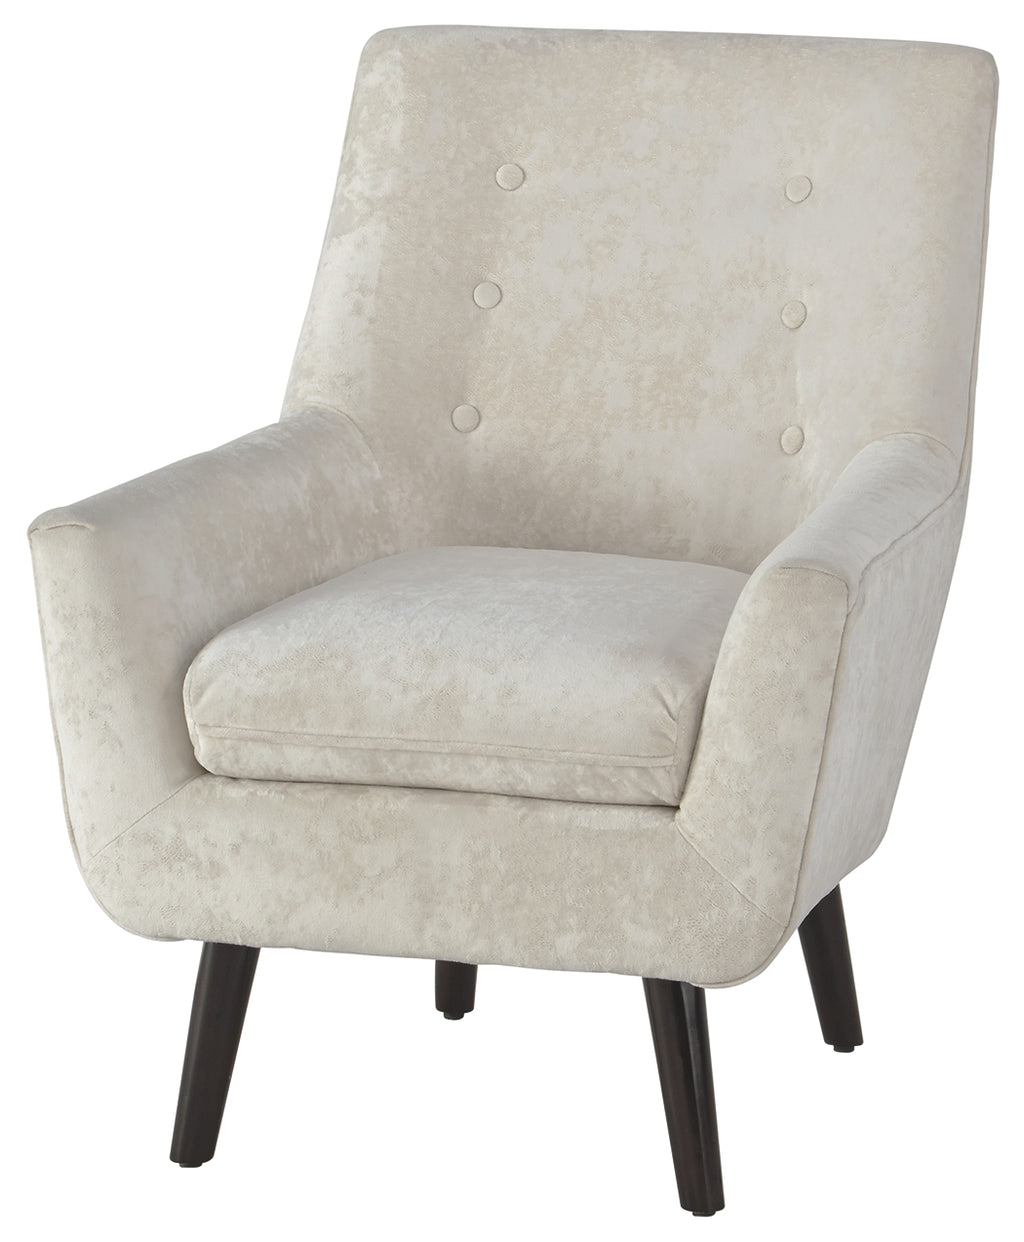 Zossen A3000045 Ivory Accent Chair